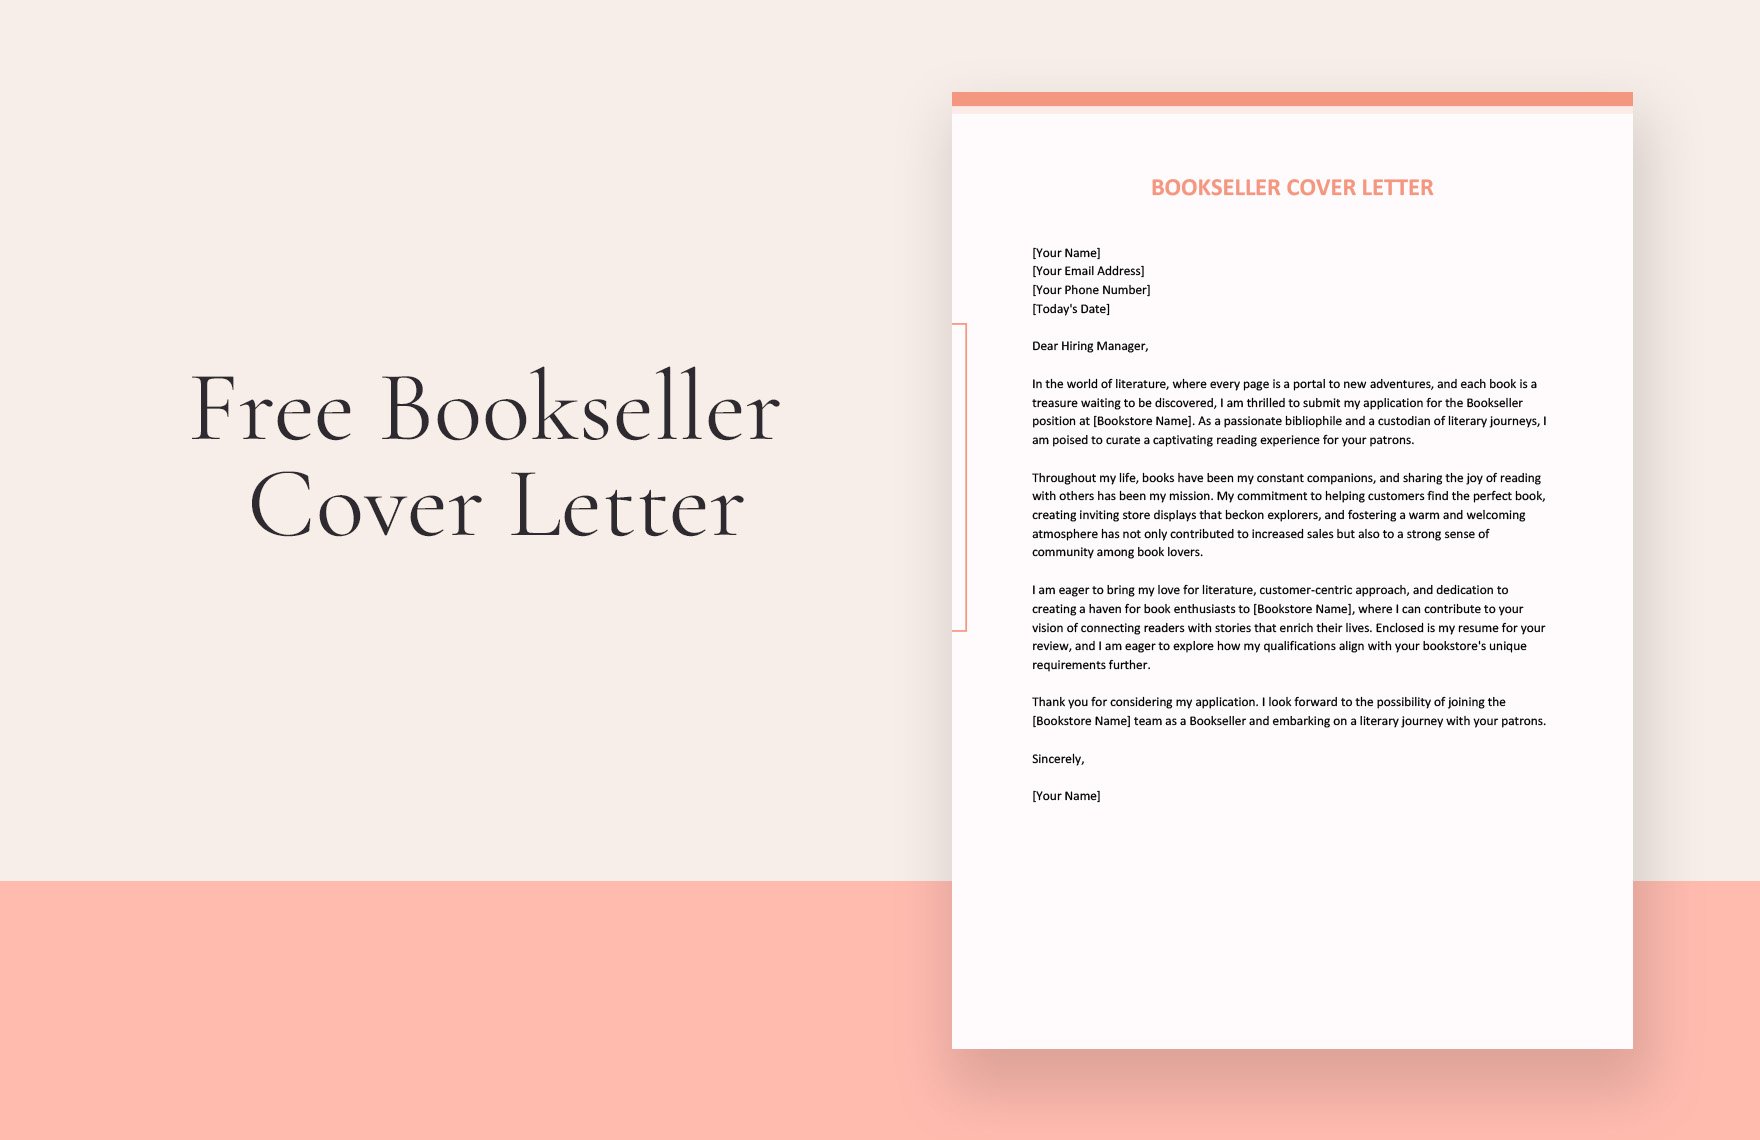 Bookseller Cover Letter in Word, Google Docs